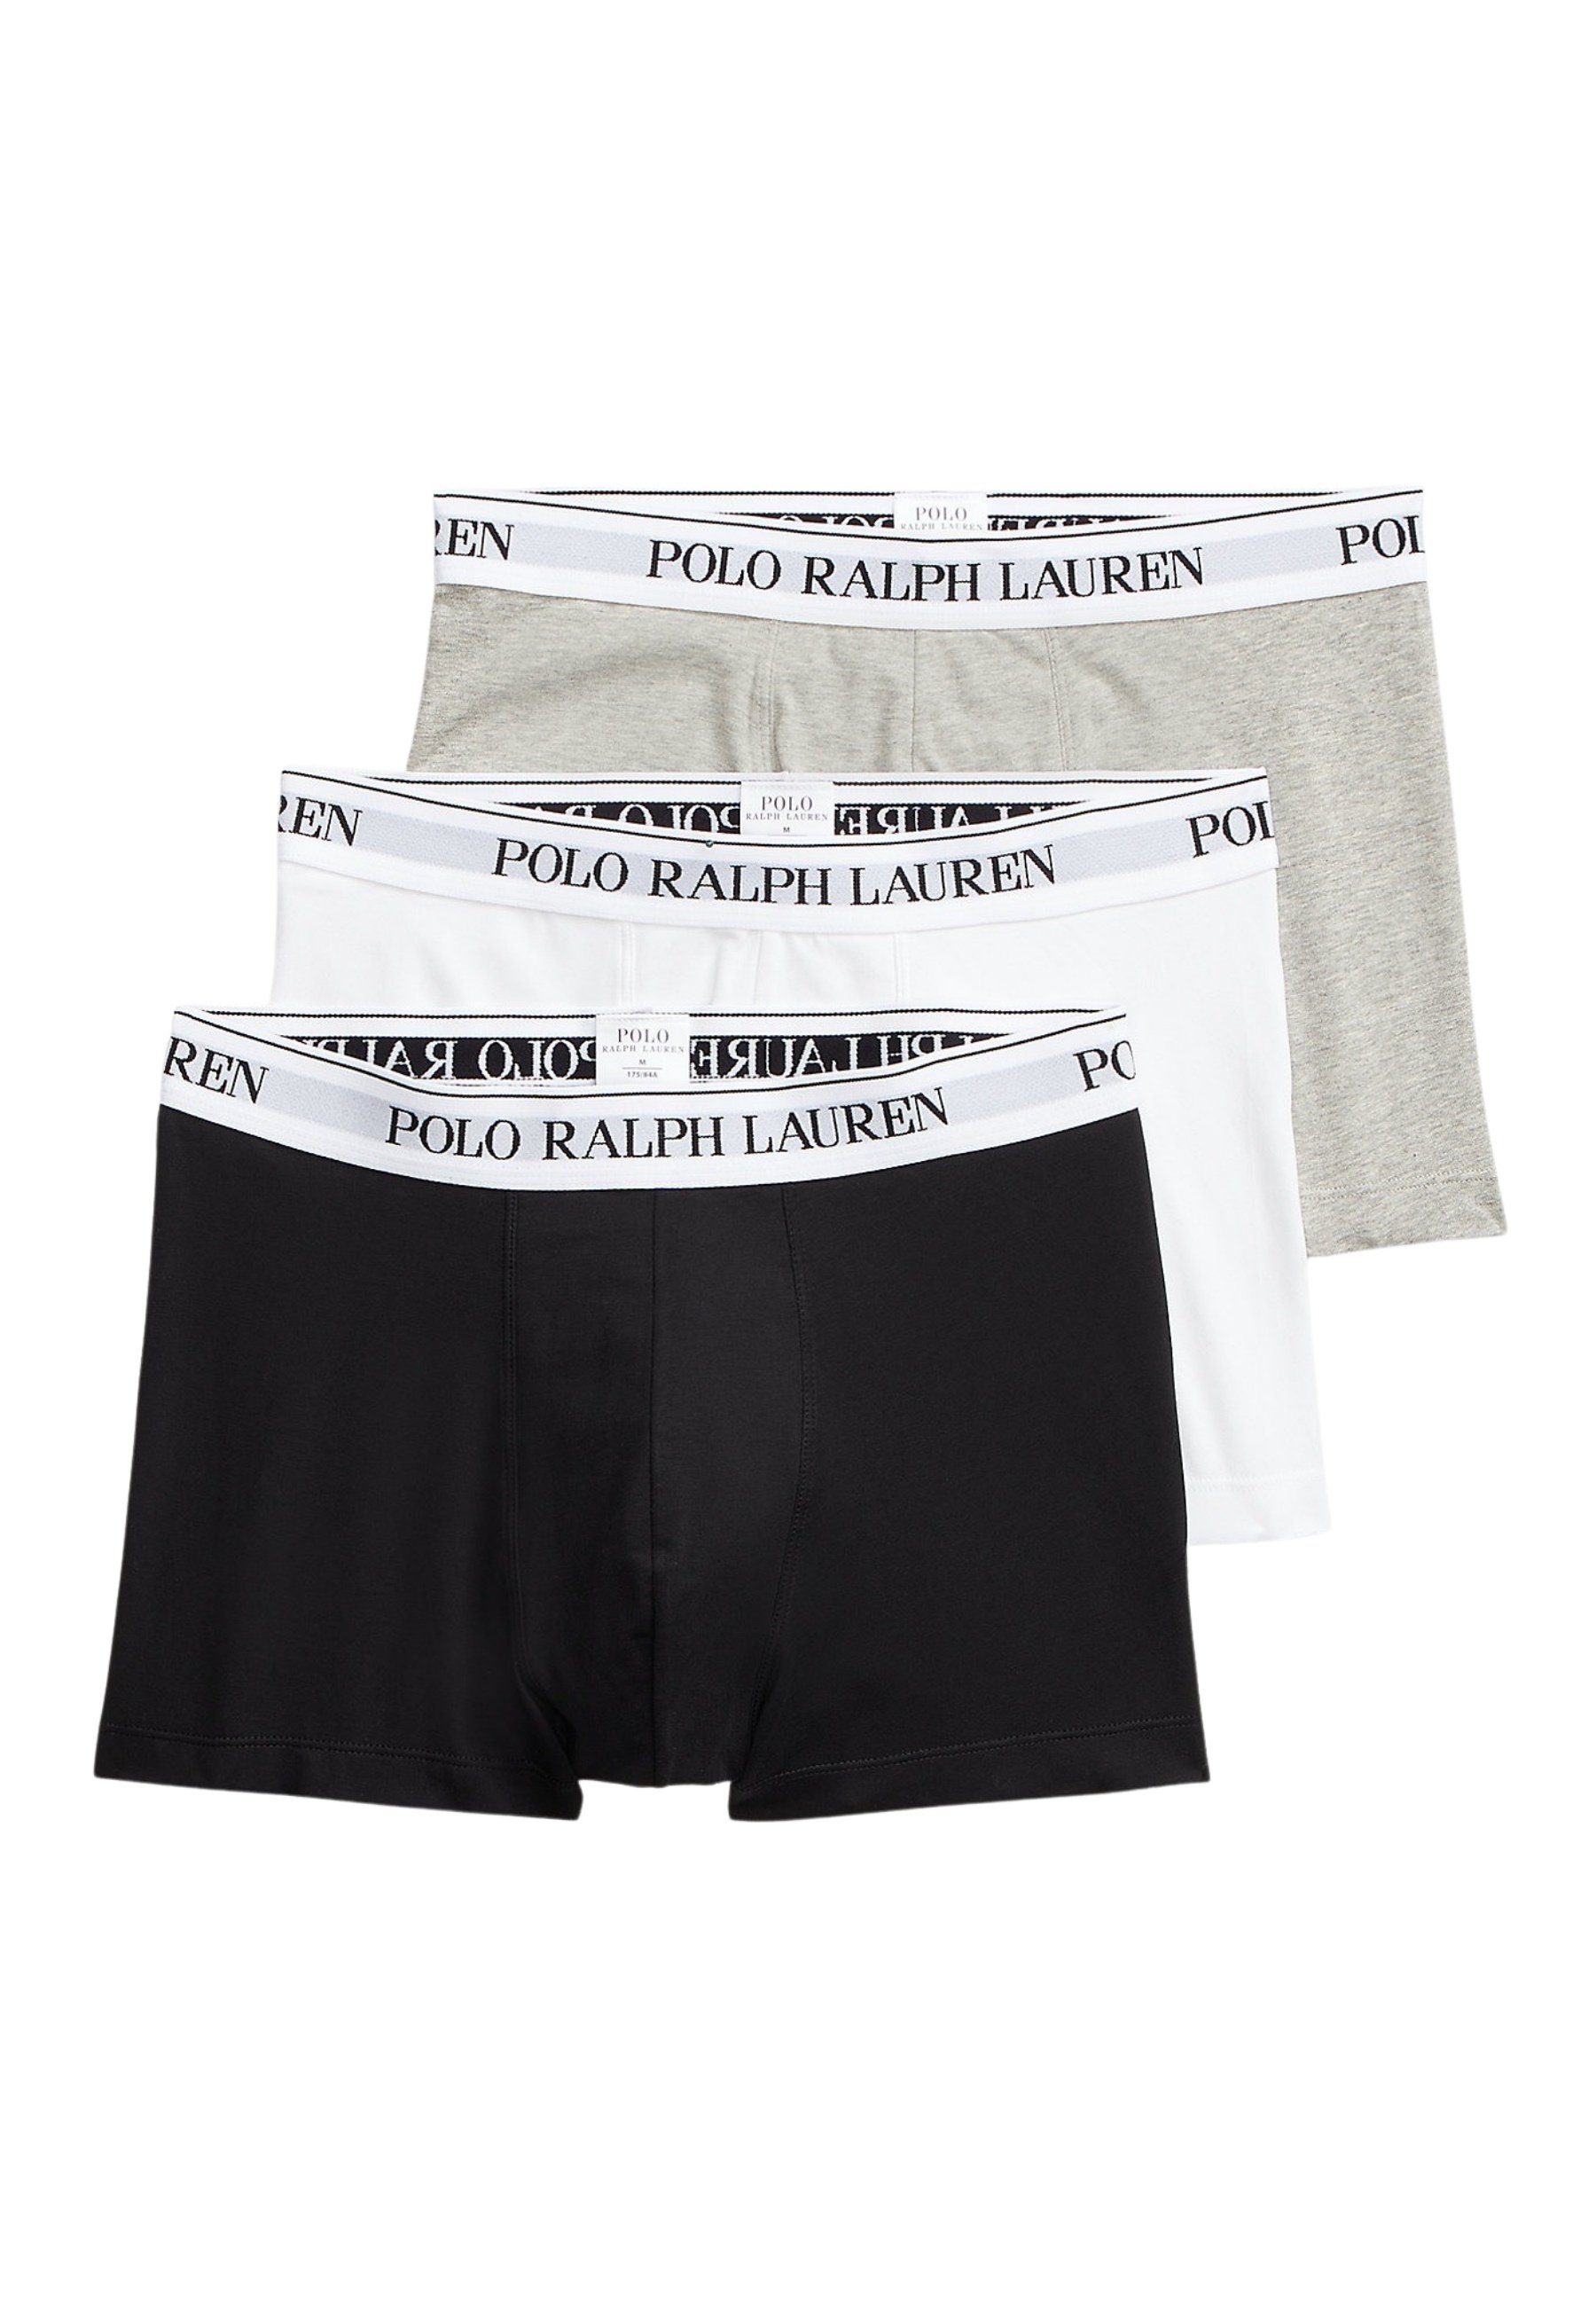 Polo Ralph Lauren Ralph Lauren Boxershorts Unterhose Trunks 3er Pack (3-St) Schwarz/Weiß/Grau